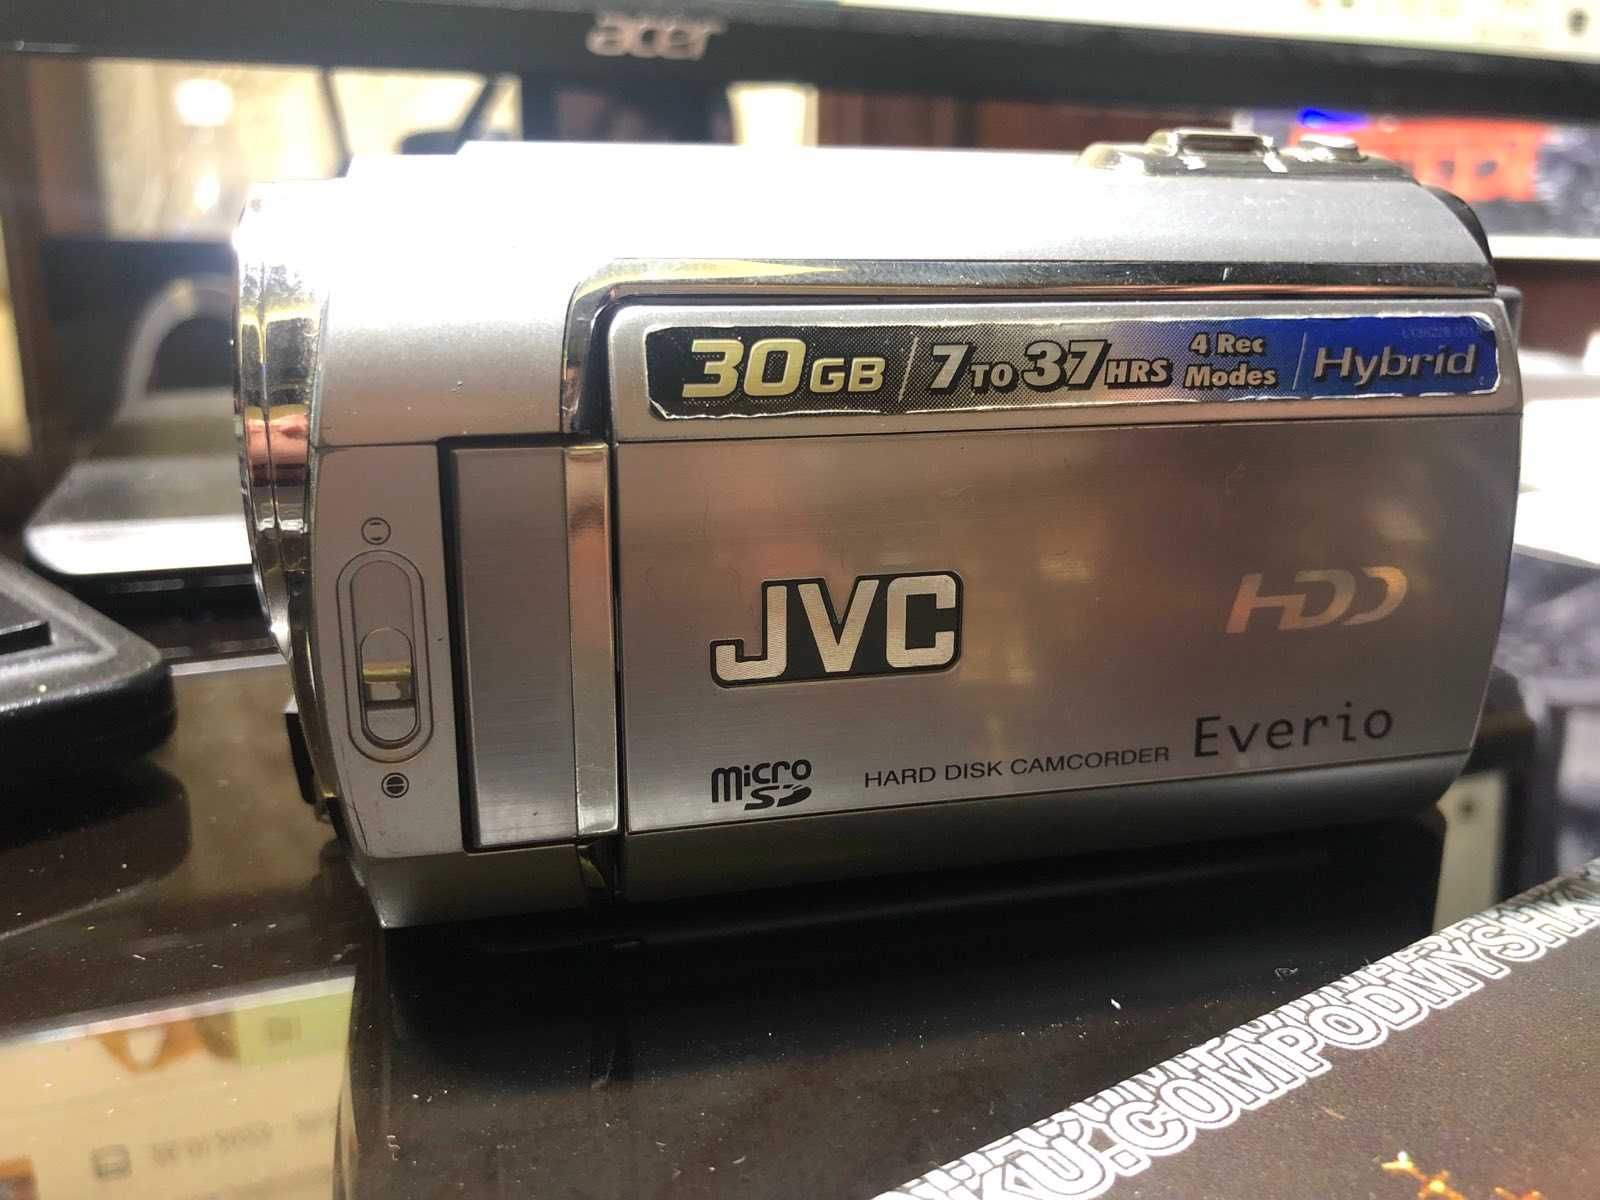 видеокамера JVS Everio HDD 30GB GZ-MG330HU